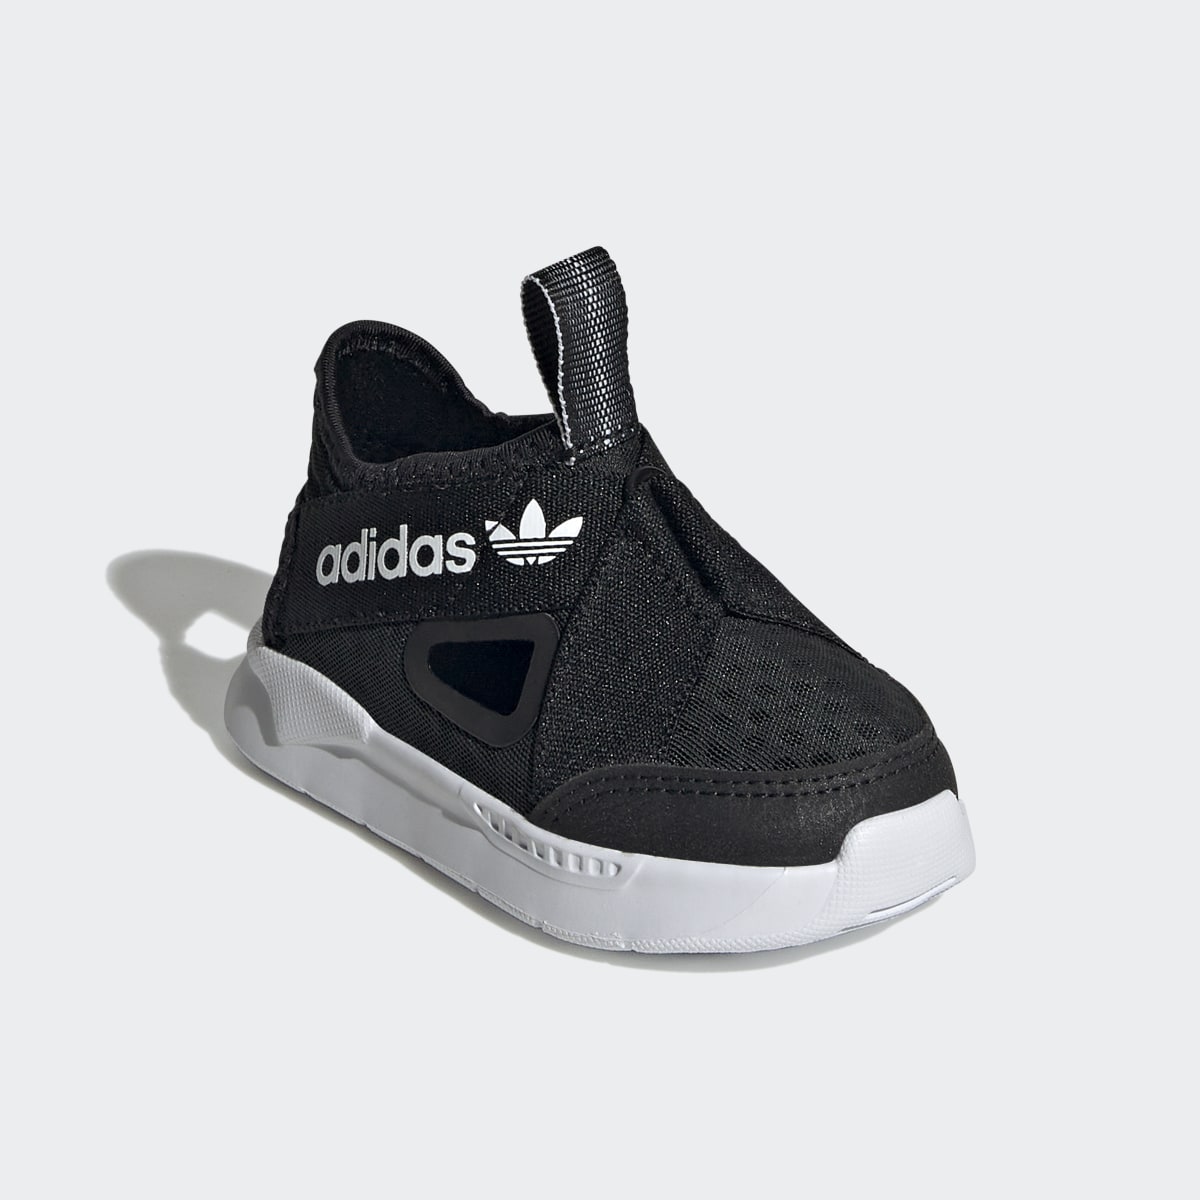 Adidas 360 Sandals. 5